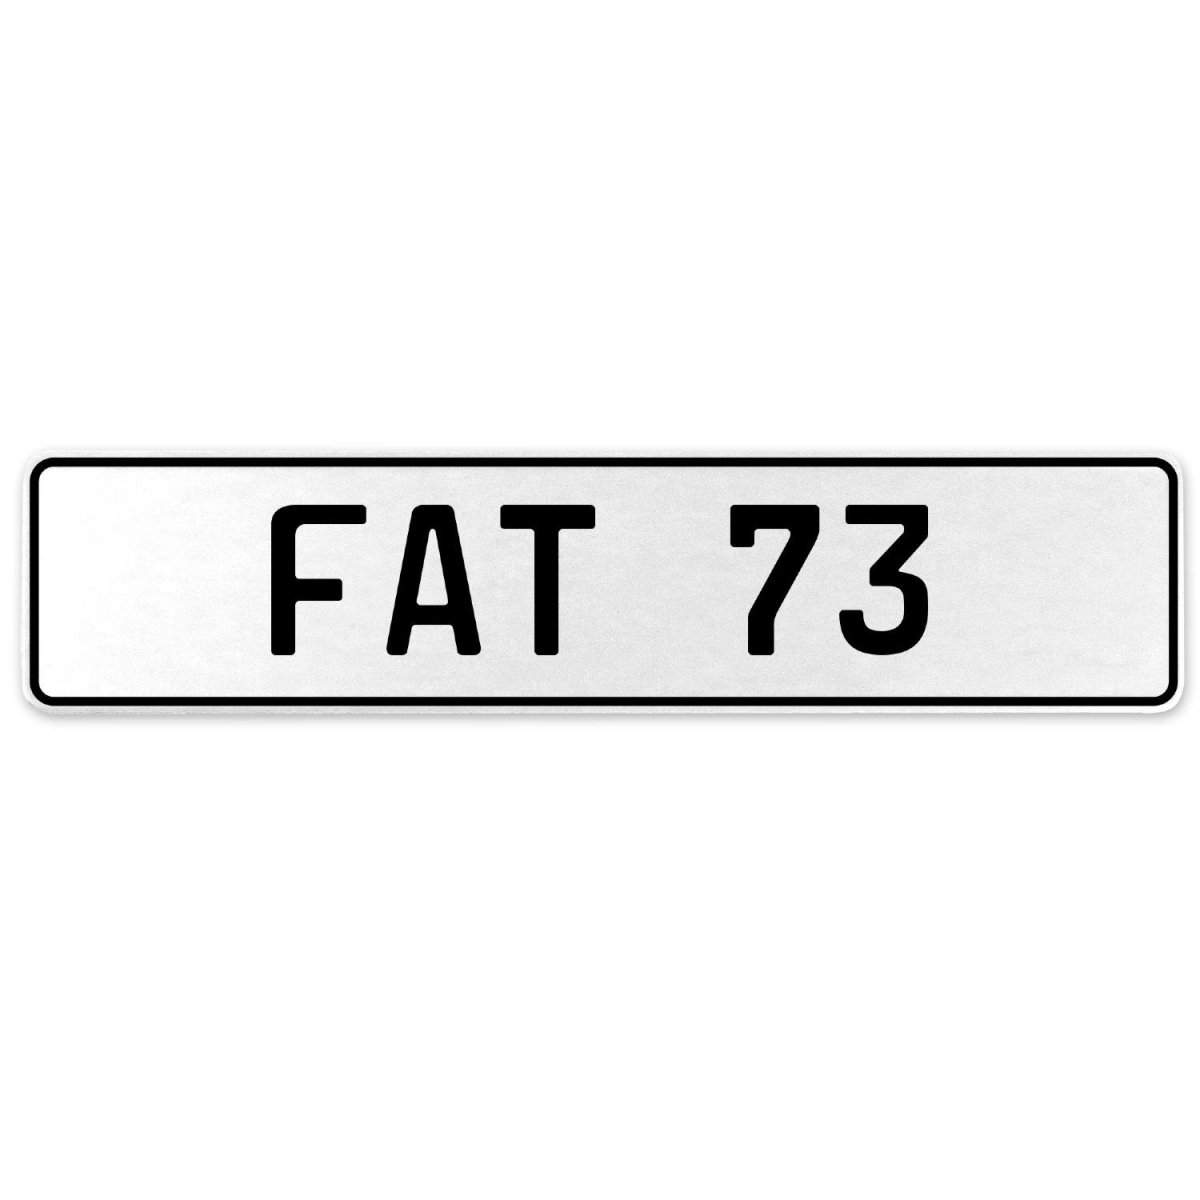 554571 Fat 73 - White Aluminum Street Sign Mancave Euro Plate Name Door Sign Wall Art